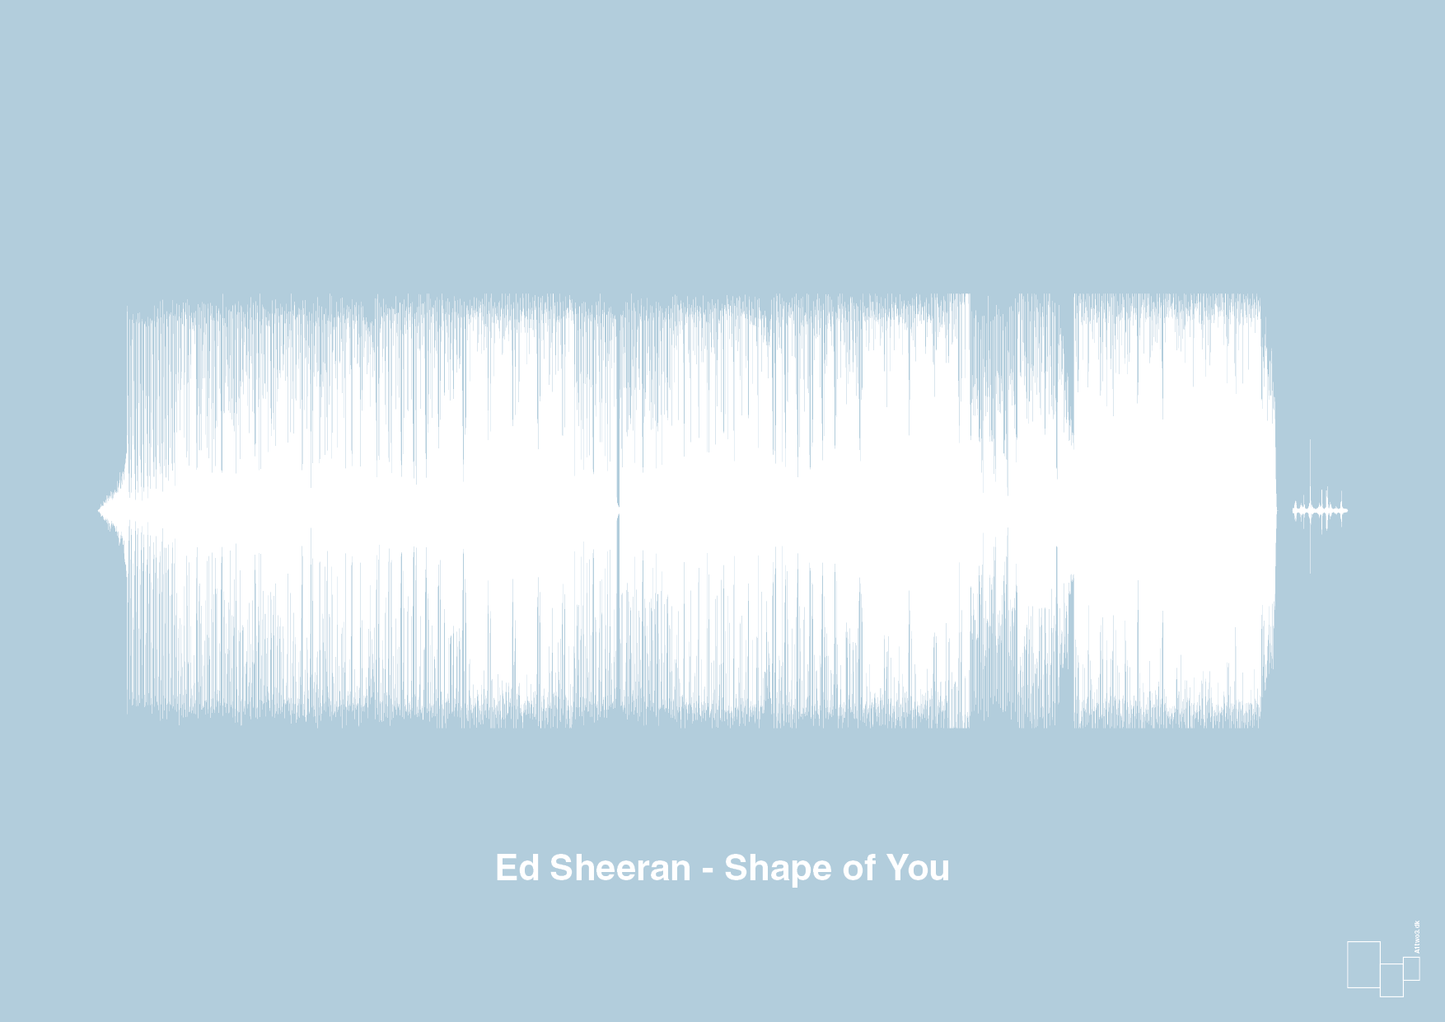 ed sheeran - shape of you - Plakat med Musik i Heavenly Blue